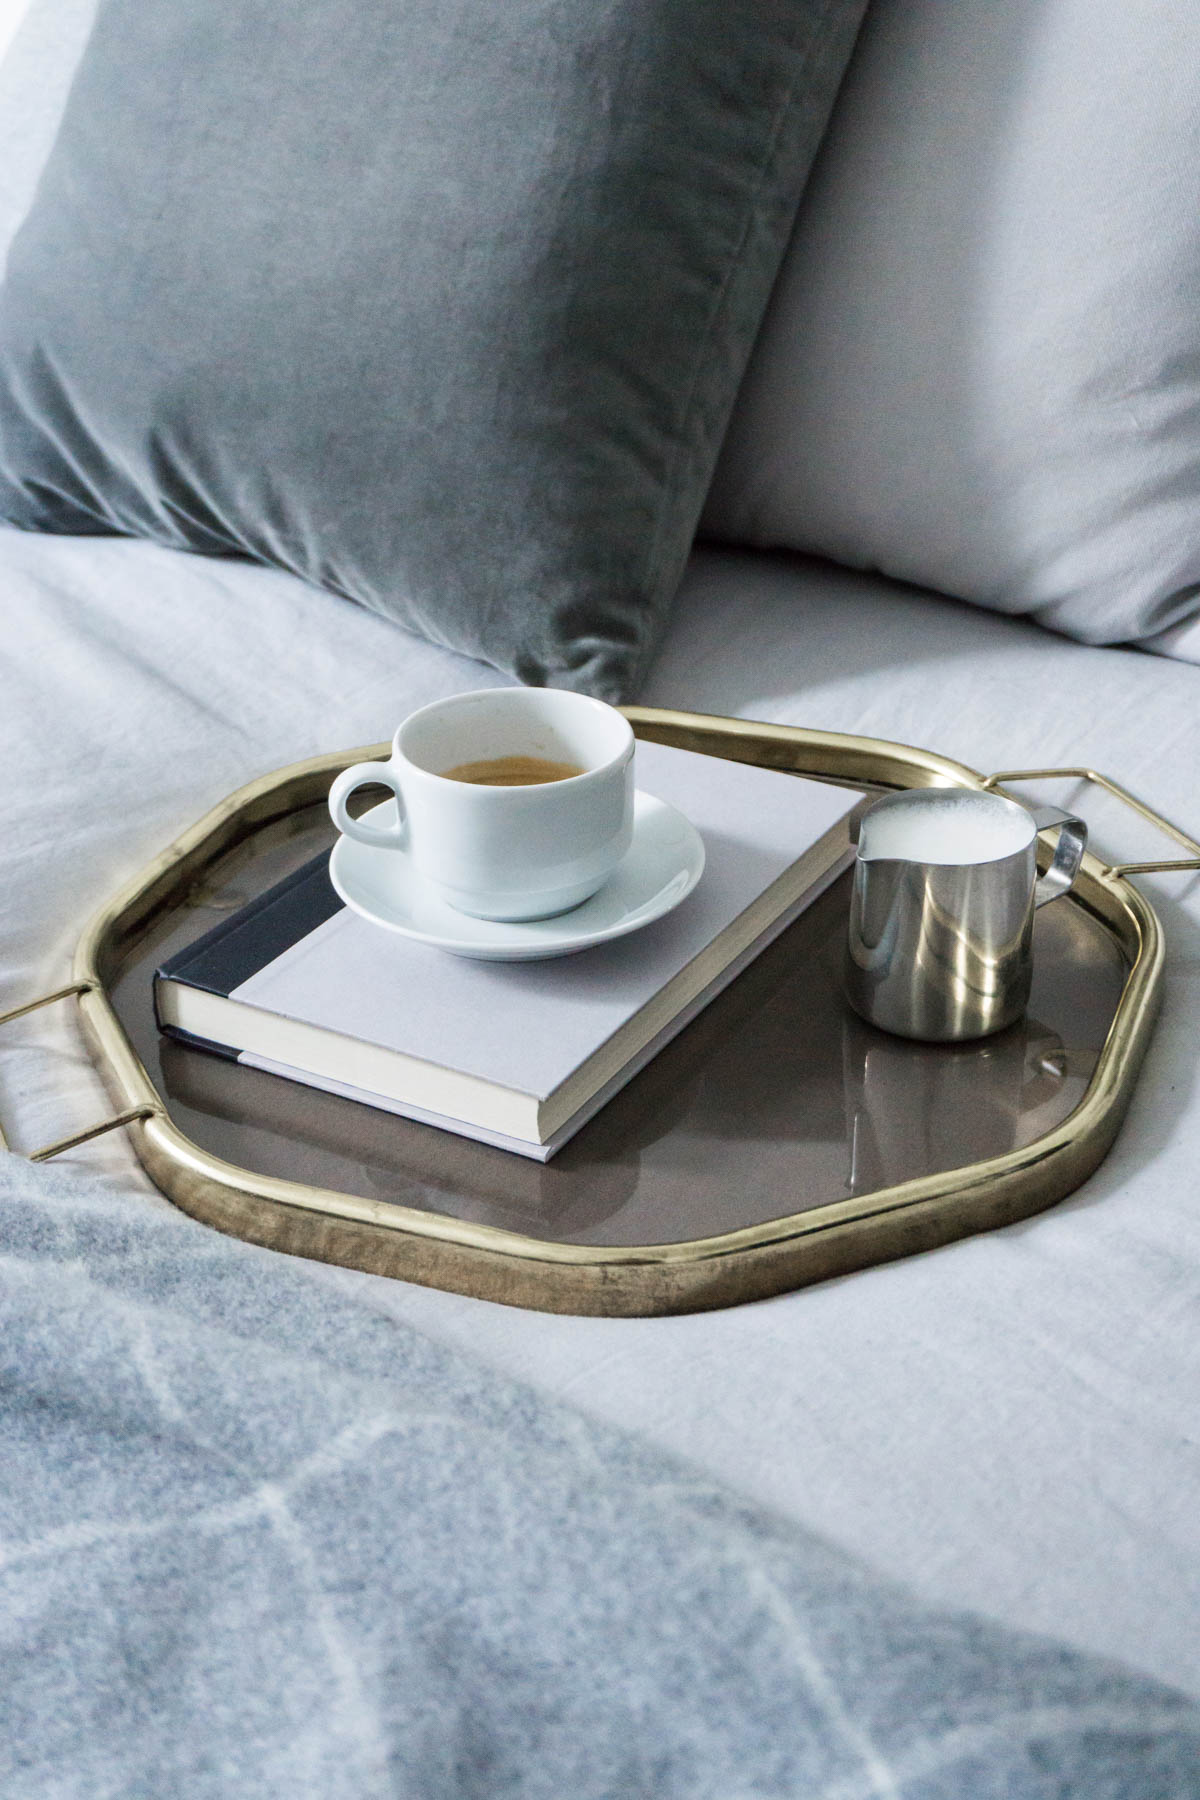 Scandinavian Glam Bedroom / Minimalist Interior, Coffe in Bed - RG Daily Blog